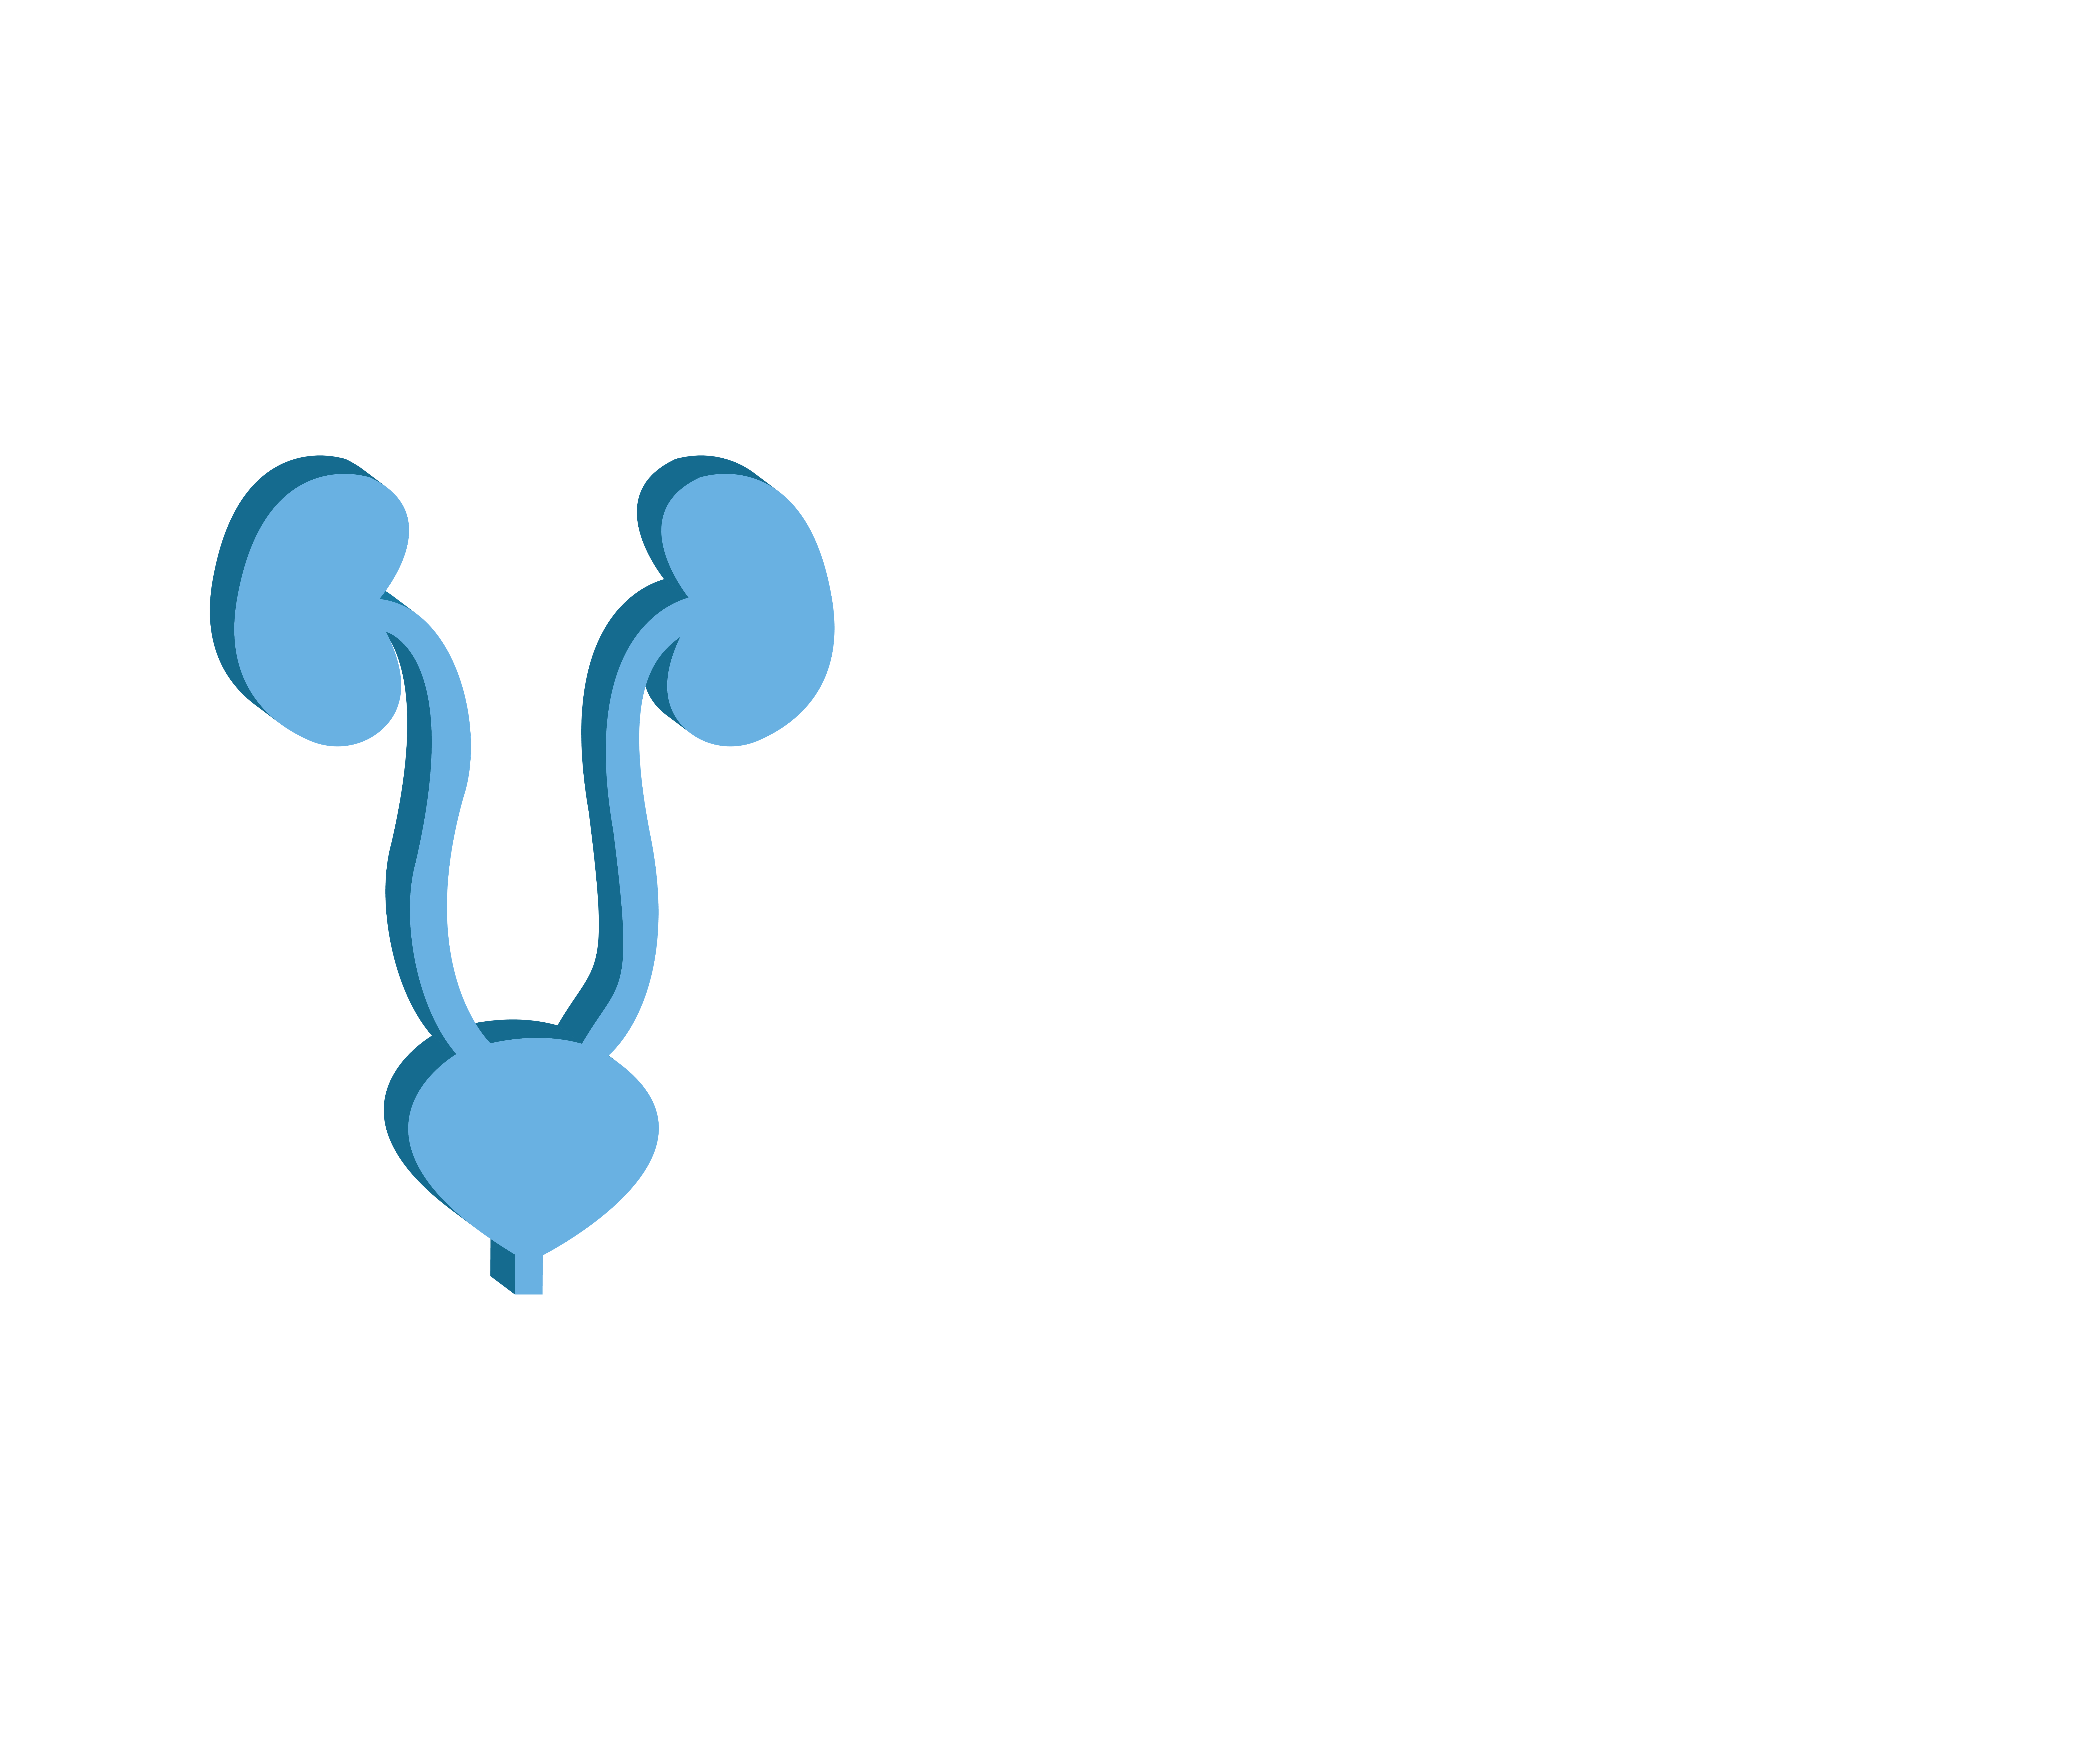 Urology Consultants Inc